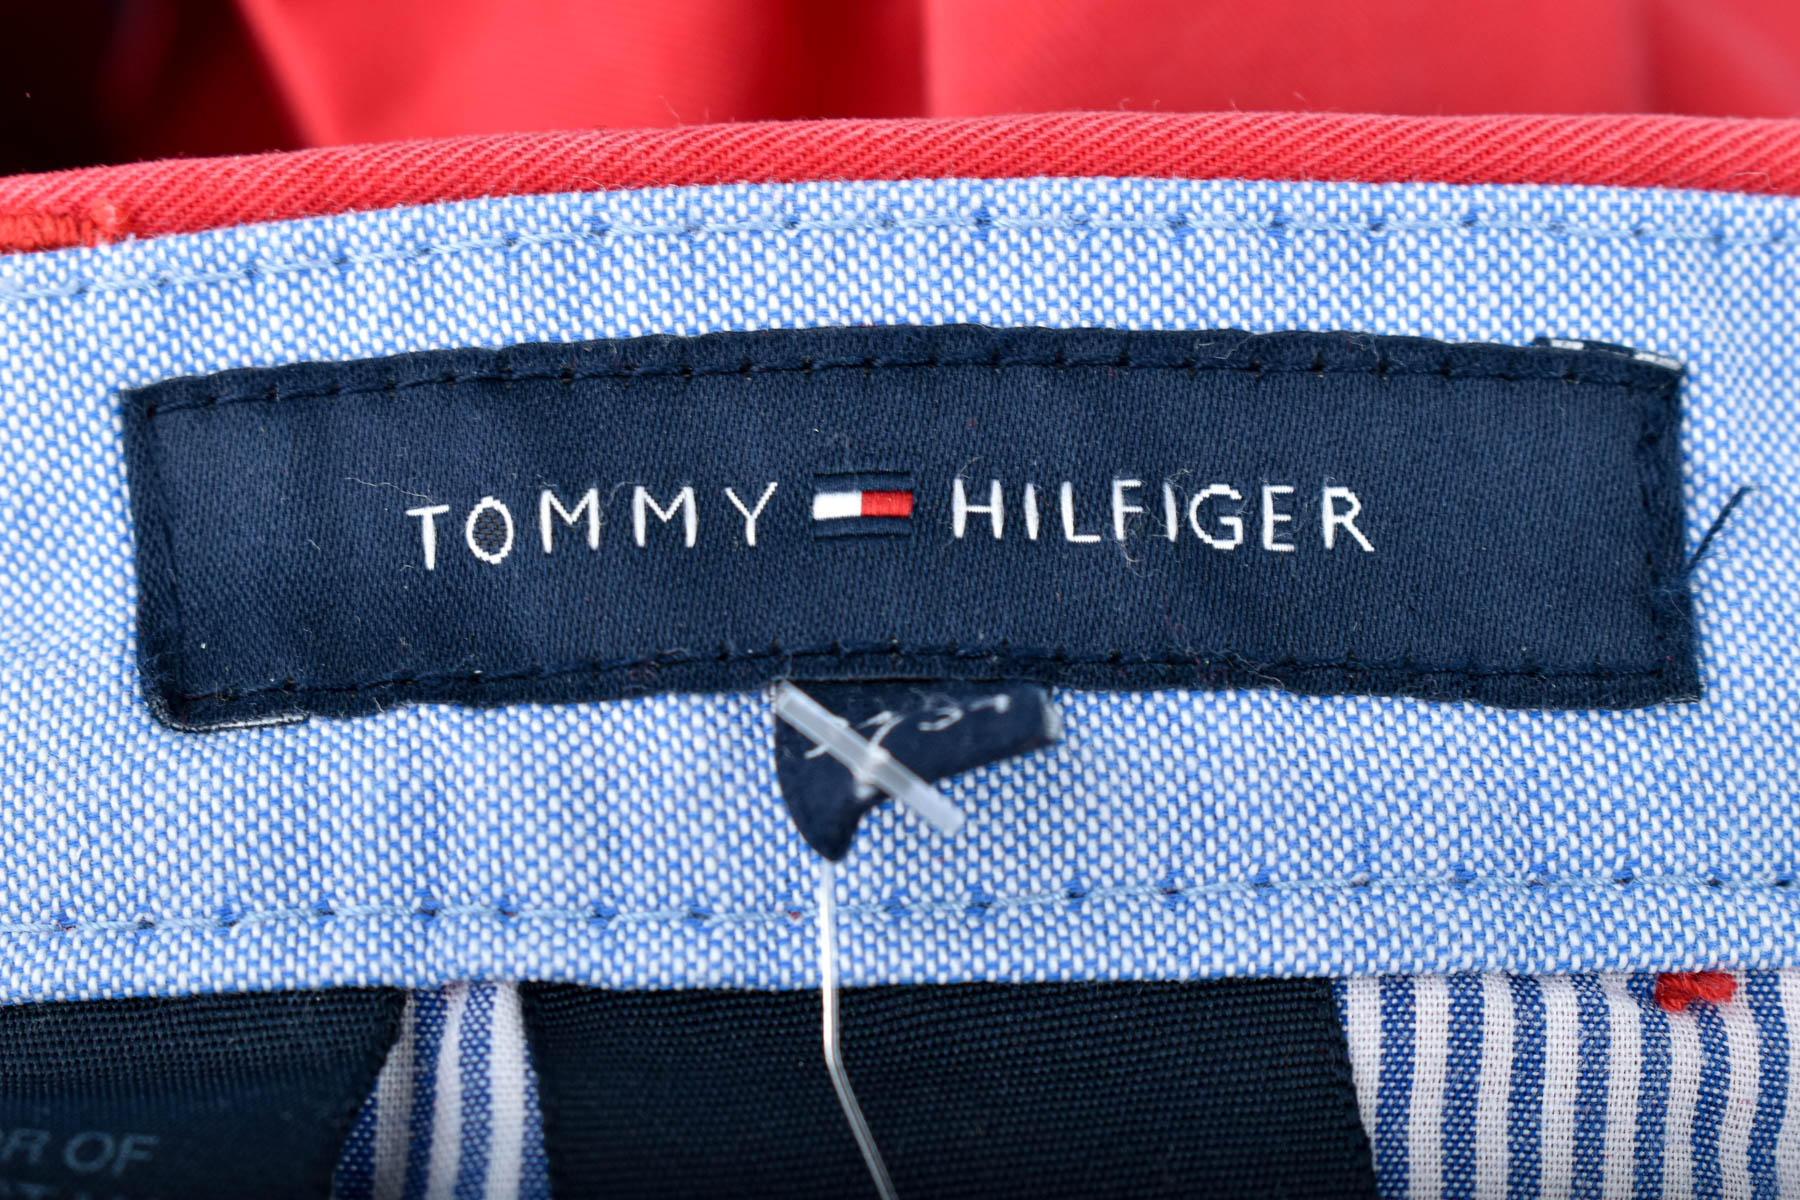 Men's trousers - TOMMY HILFIGER - 2